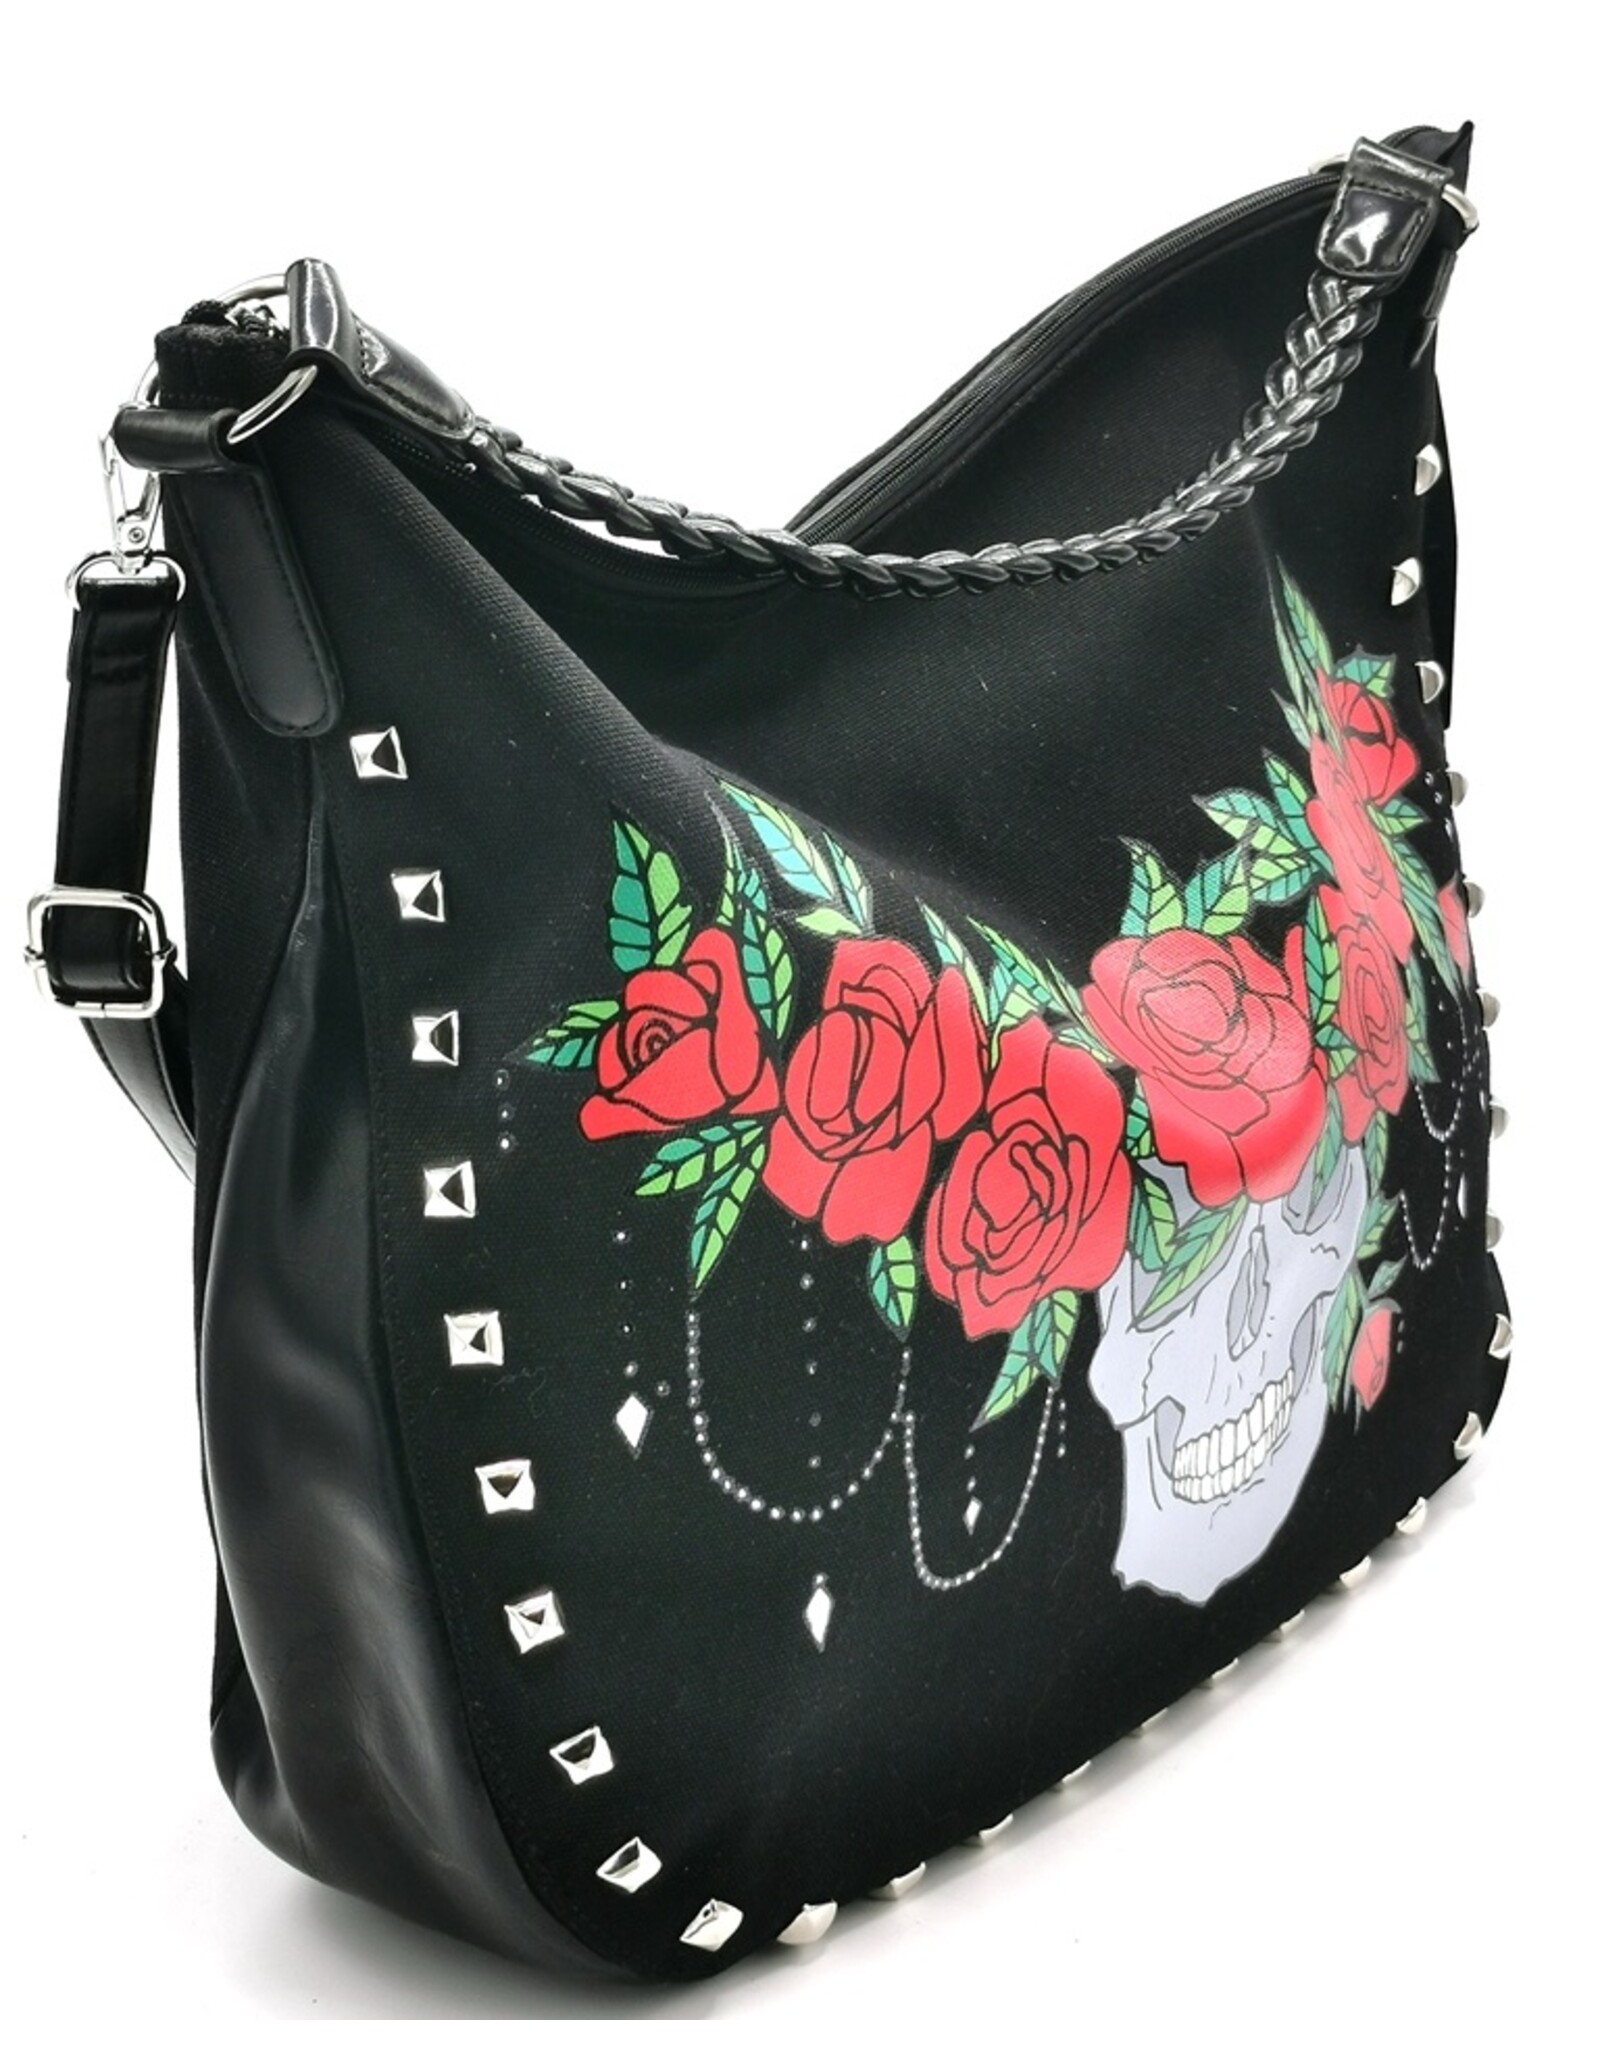 Jawbreaker Gothic bags Steampunk bags - Jawbreaker Skull & Roses Tote bag